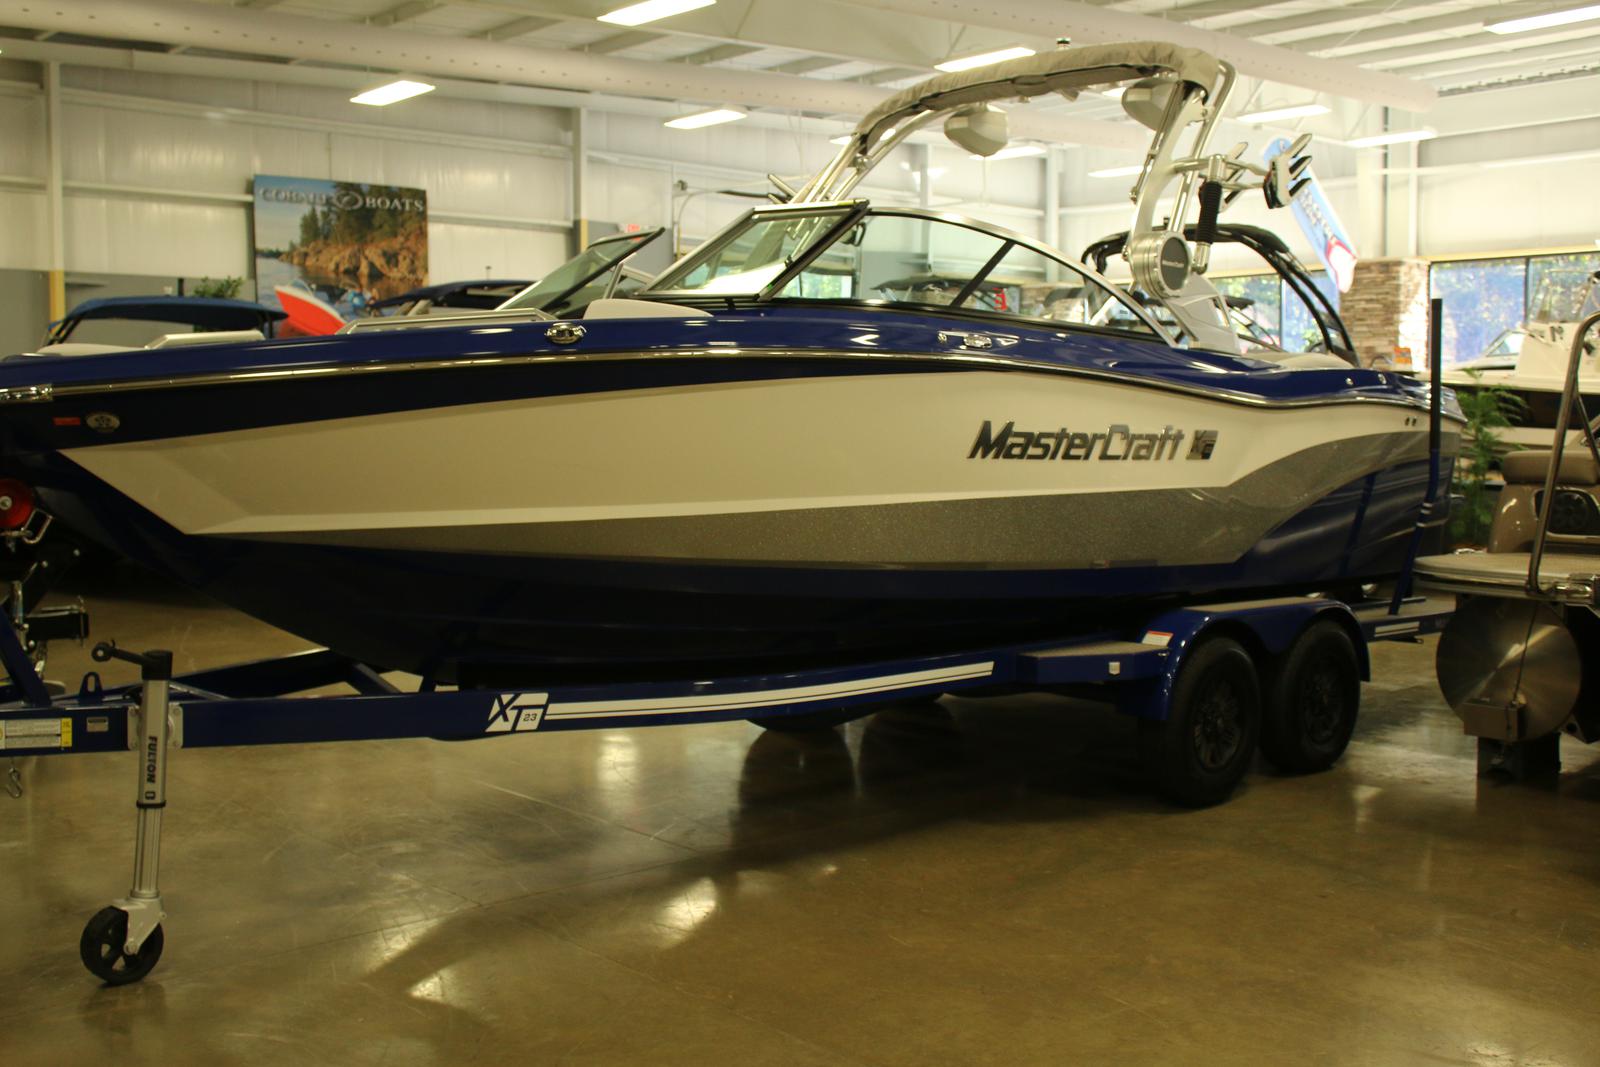 Mastercraft Xt23 power boats for sale - boats.com